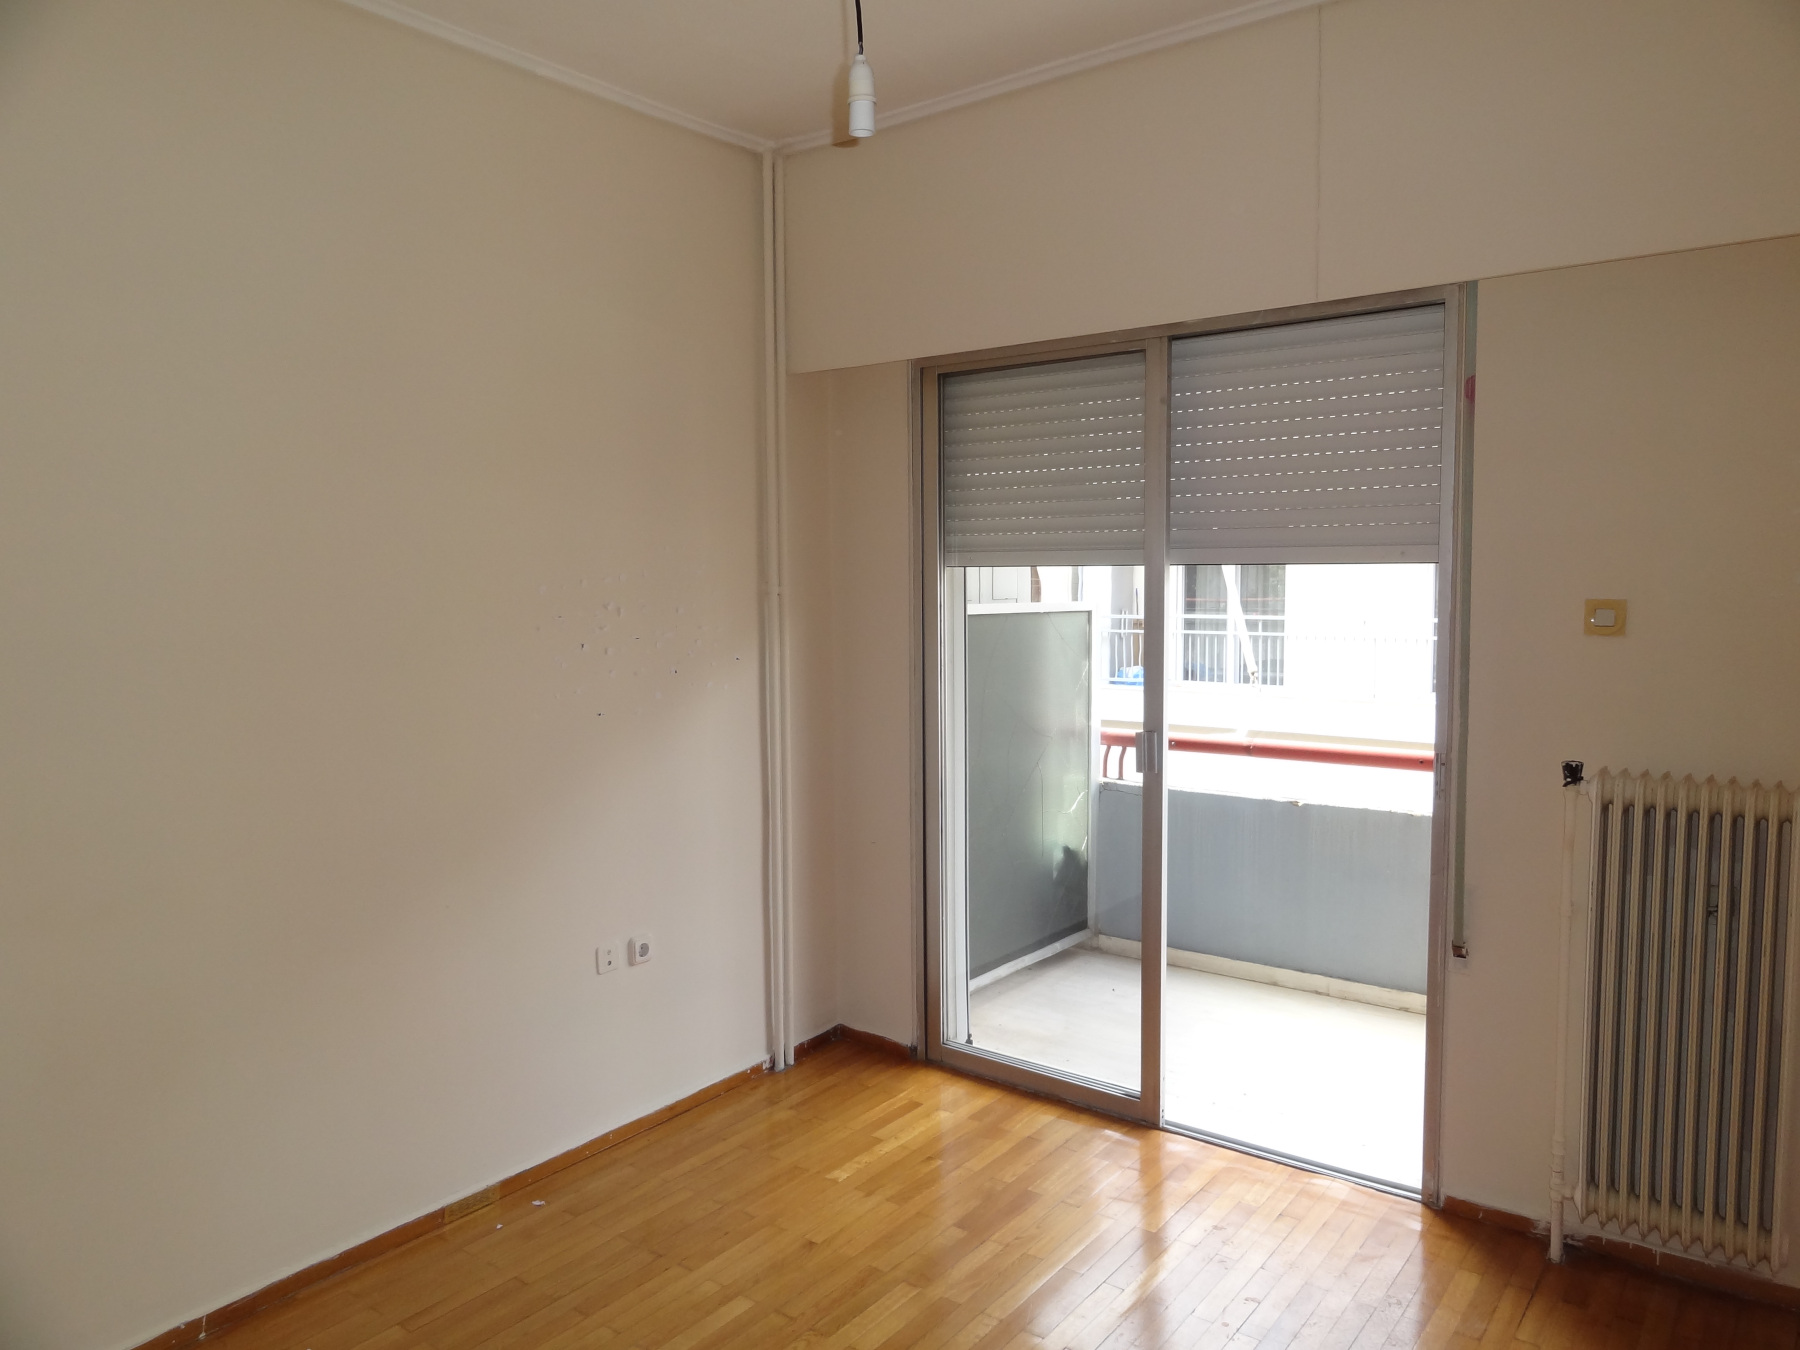 Studio for rent 33 sq.m. 3rd floor near Dodoni Avenue in the center of Ioannina